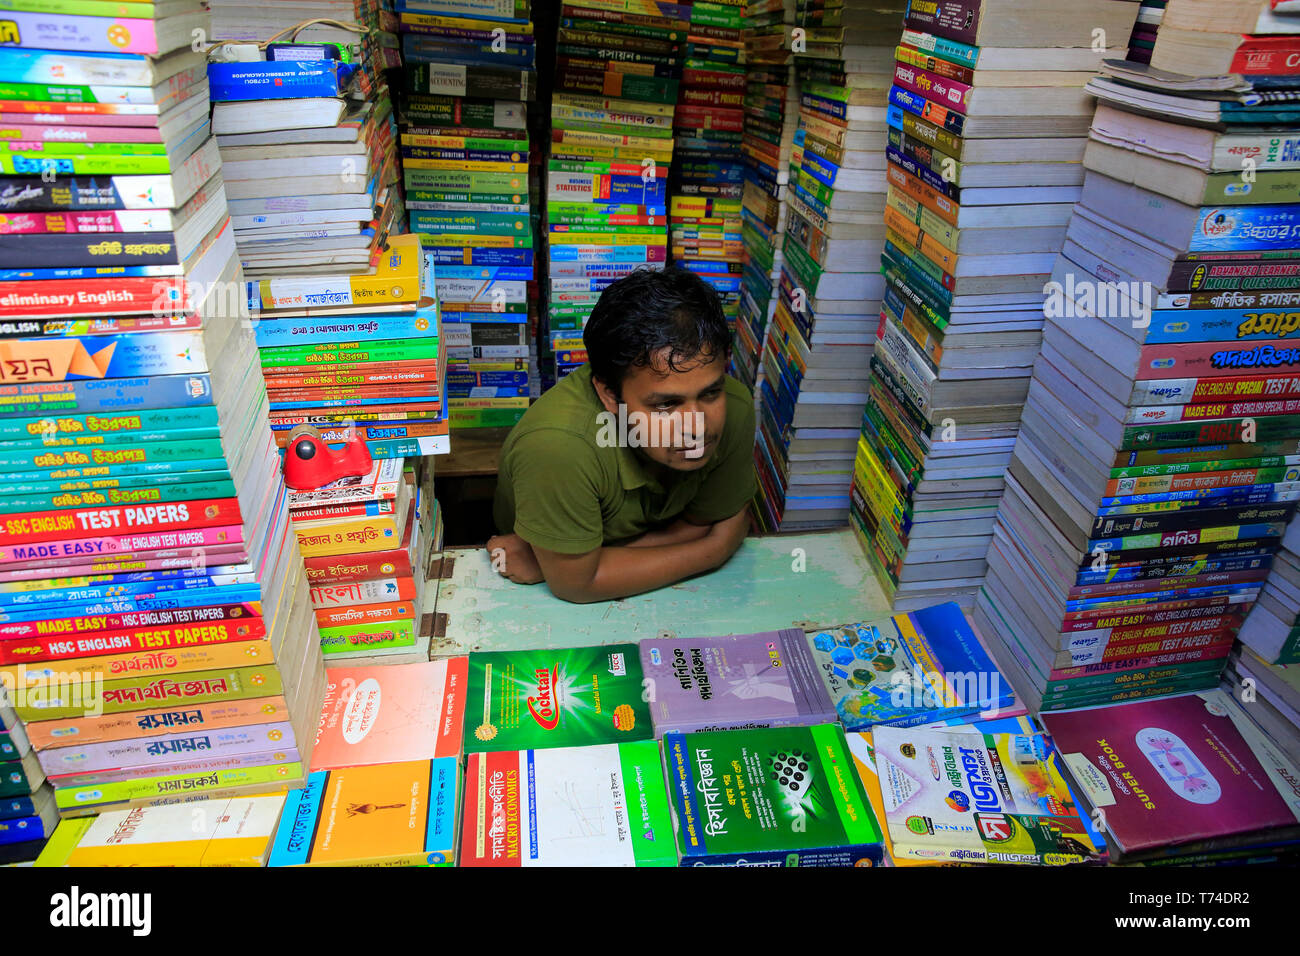 Bookshops at Nilkhet Book Market in Dhaka, Bangladesh Stock Photo